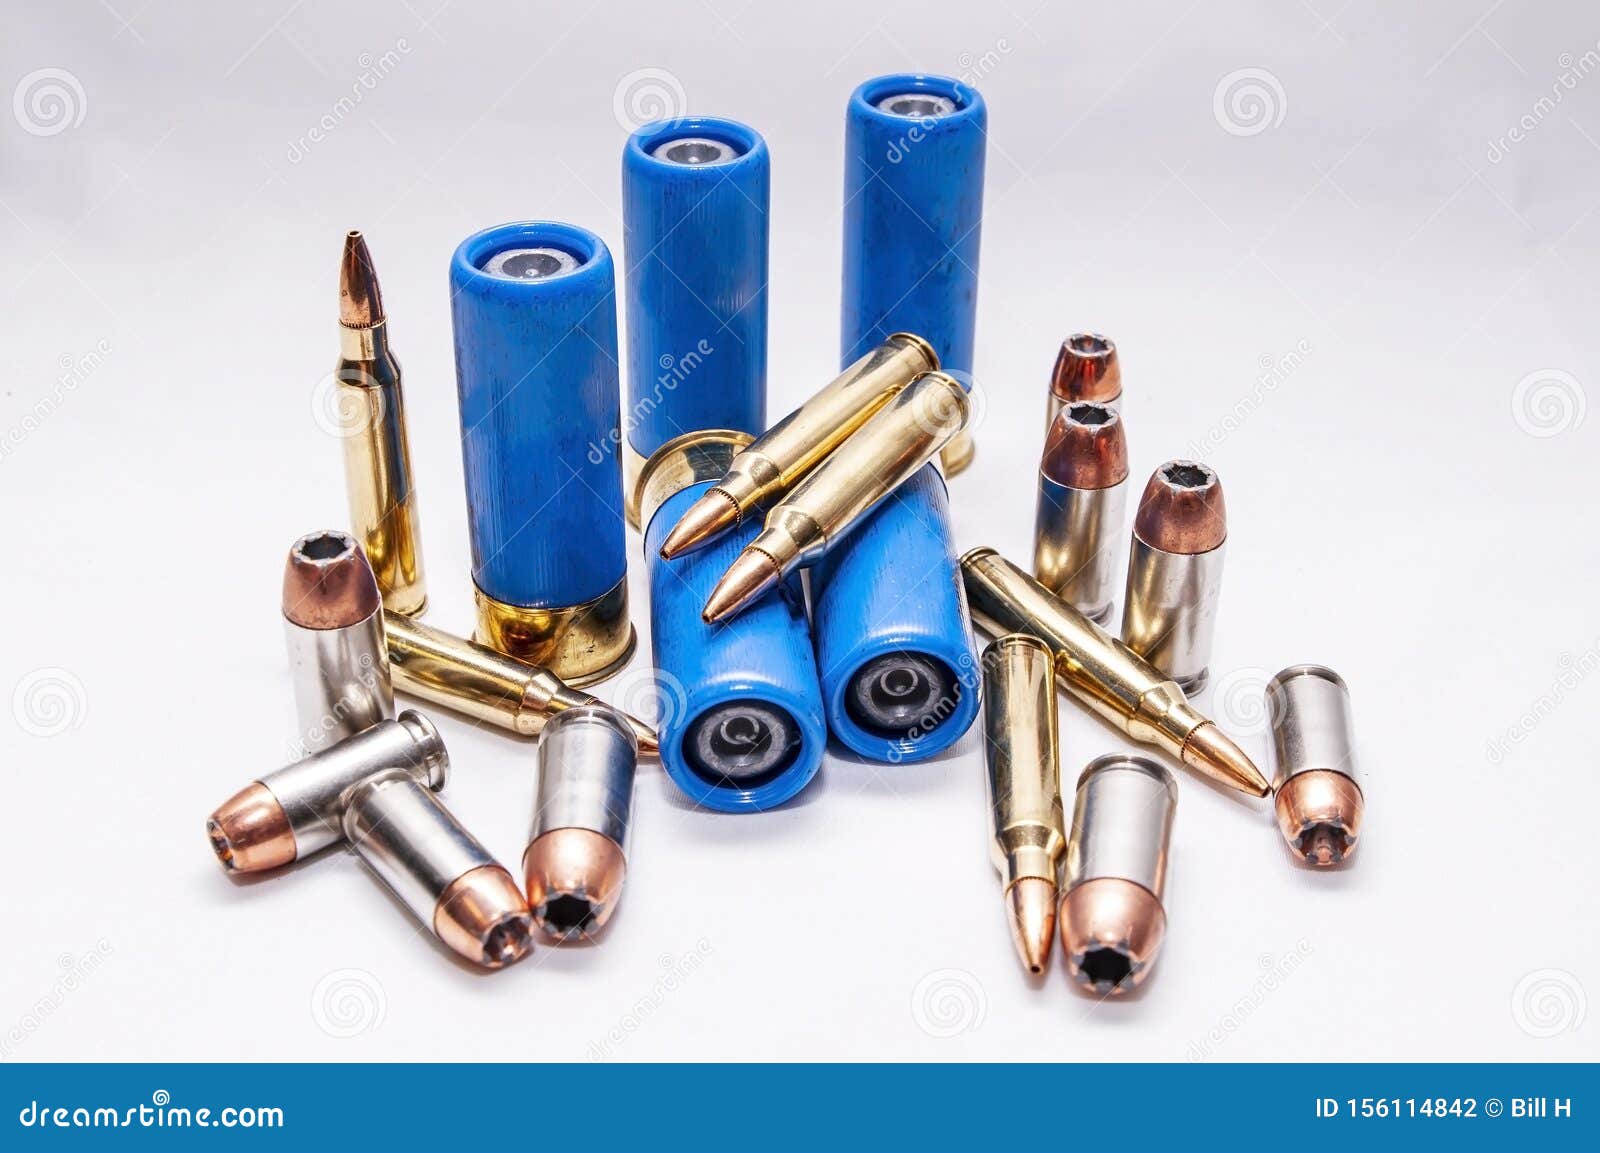 Rifled Slug Shotgun Shells with 223 Caliber Bullets Along with 45 Caliber  and 9mm Hollow Point Bullets Stock Photo - Image of shiny, group: 156114842